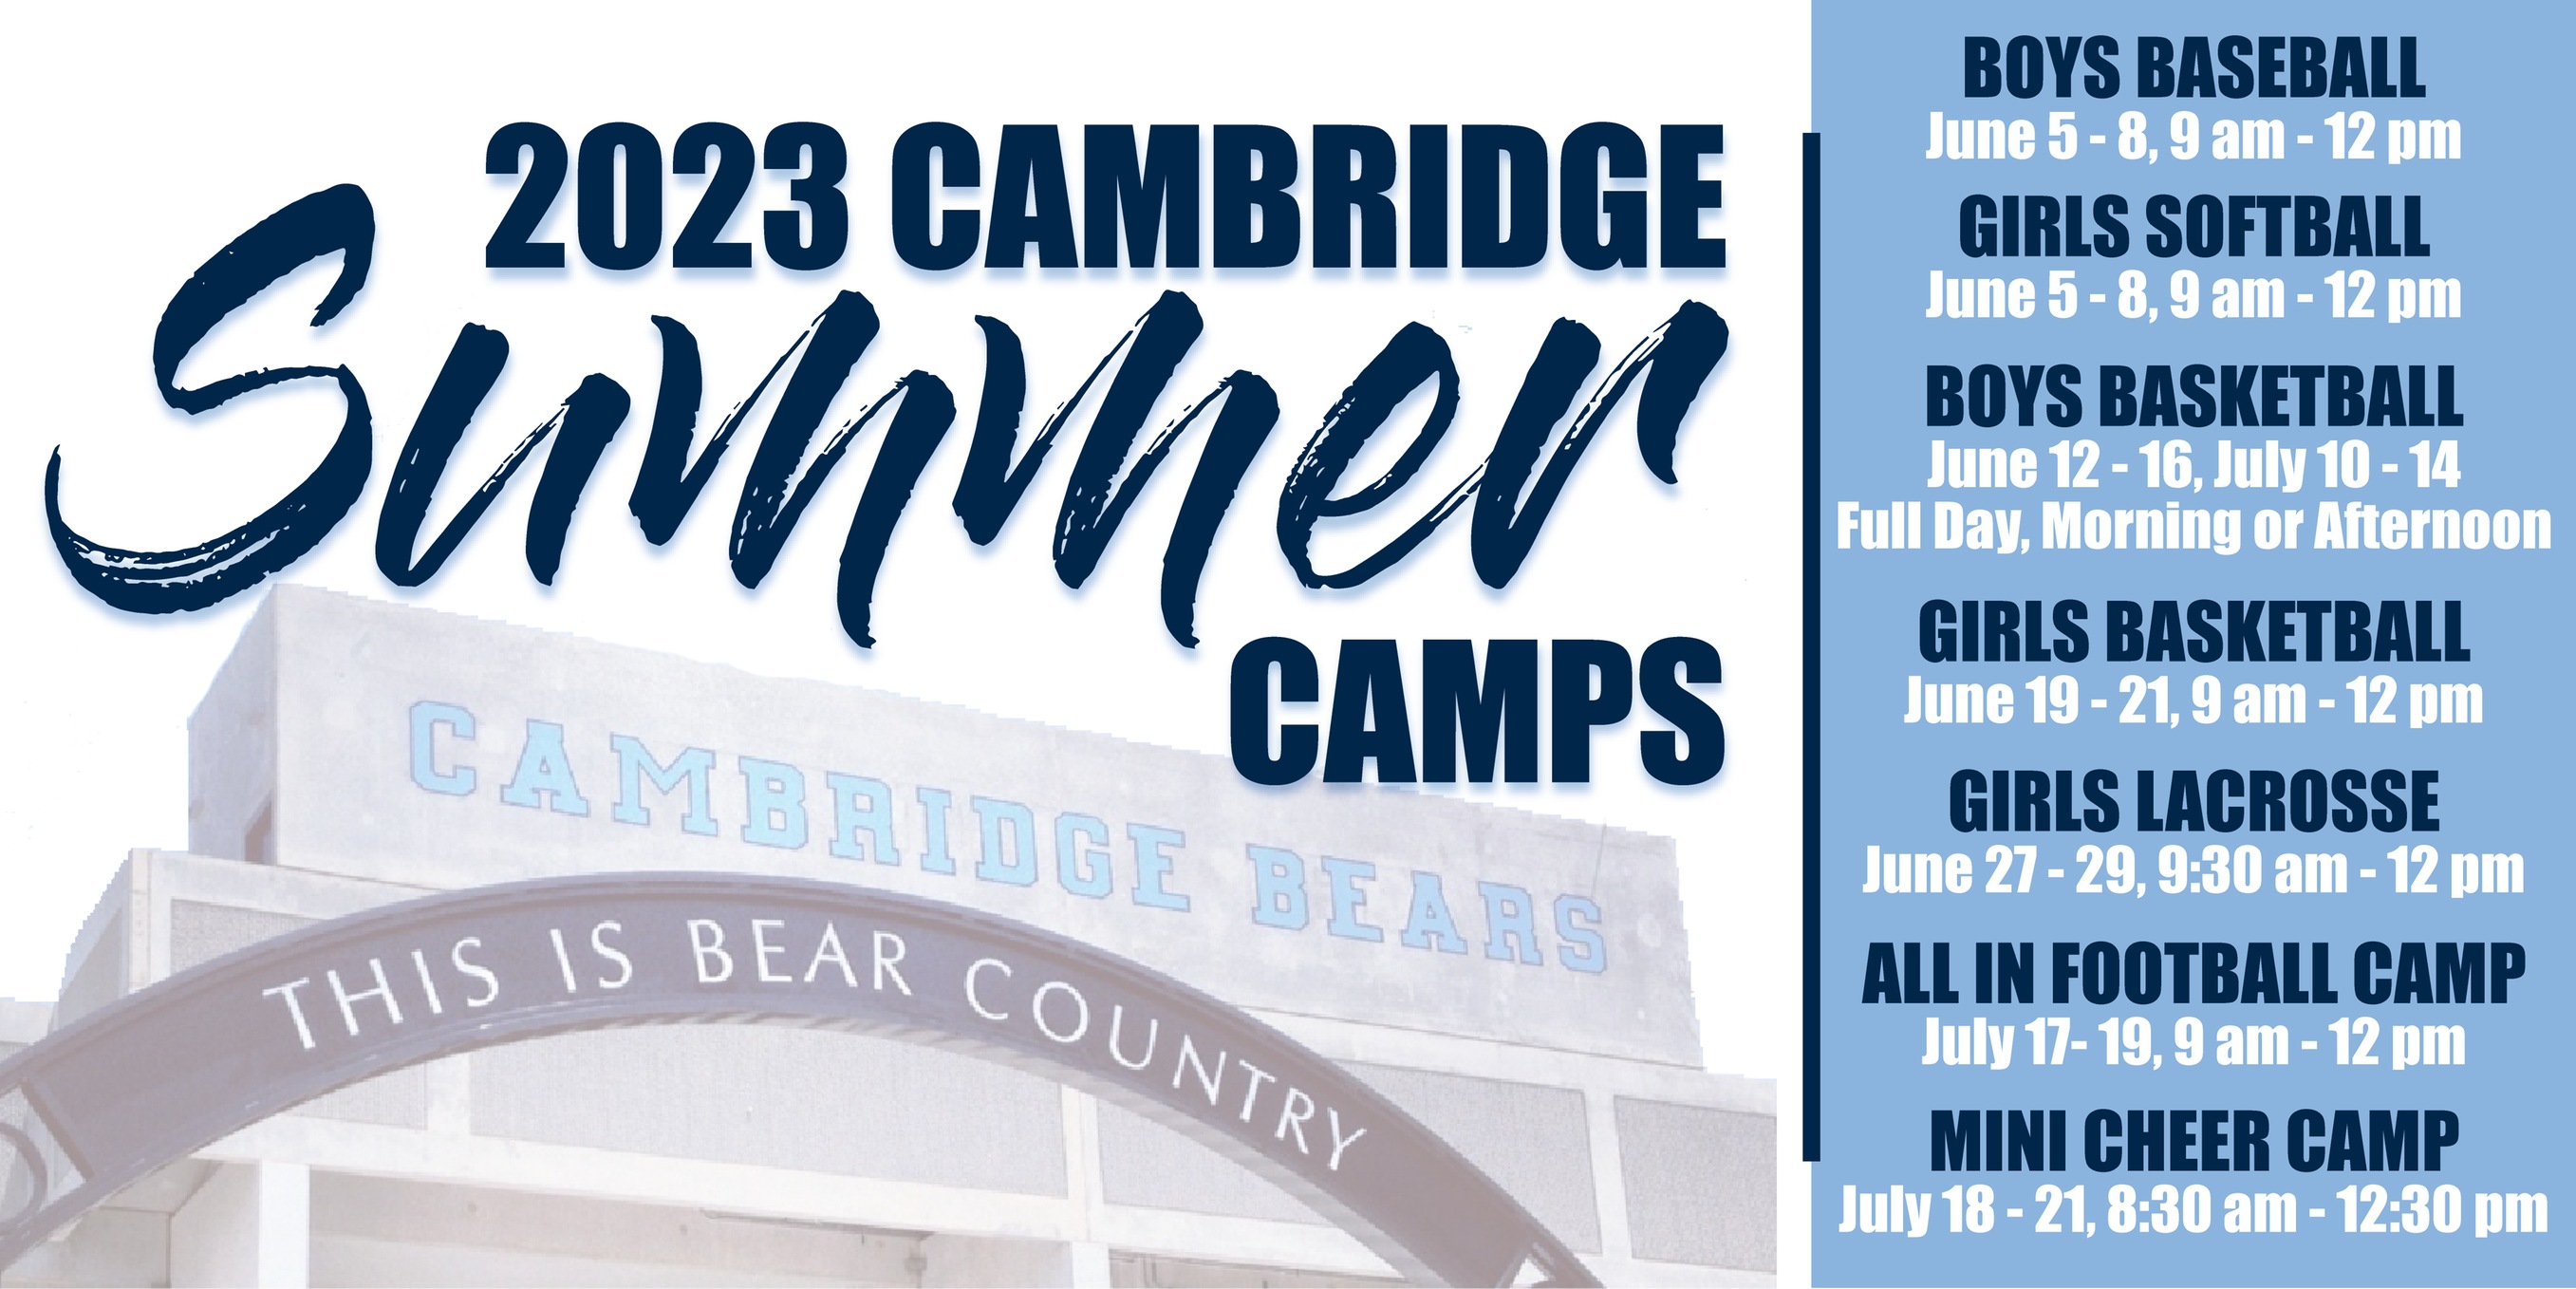 2023 Summer Camps